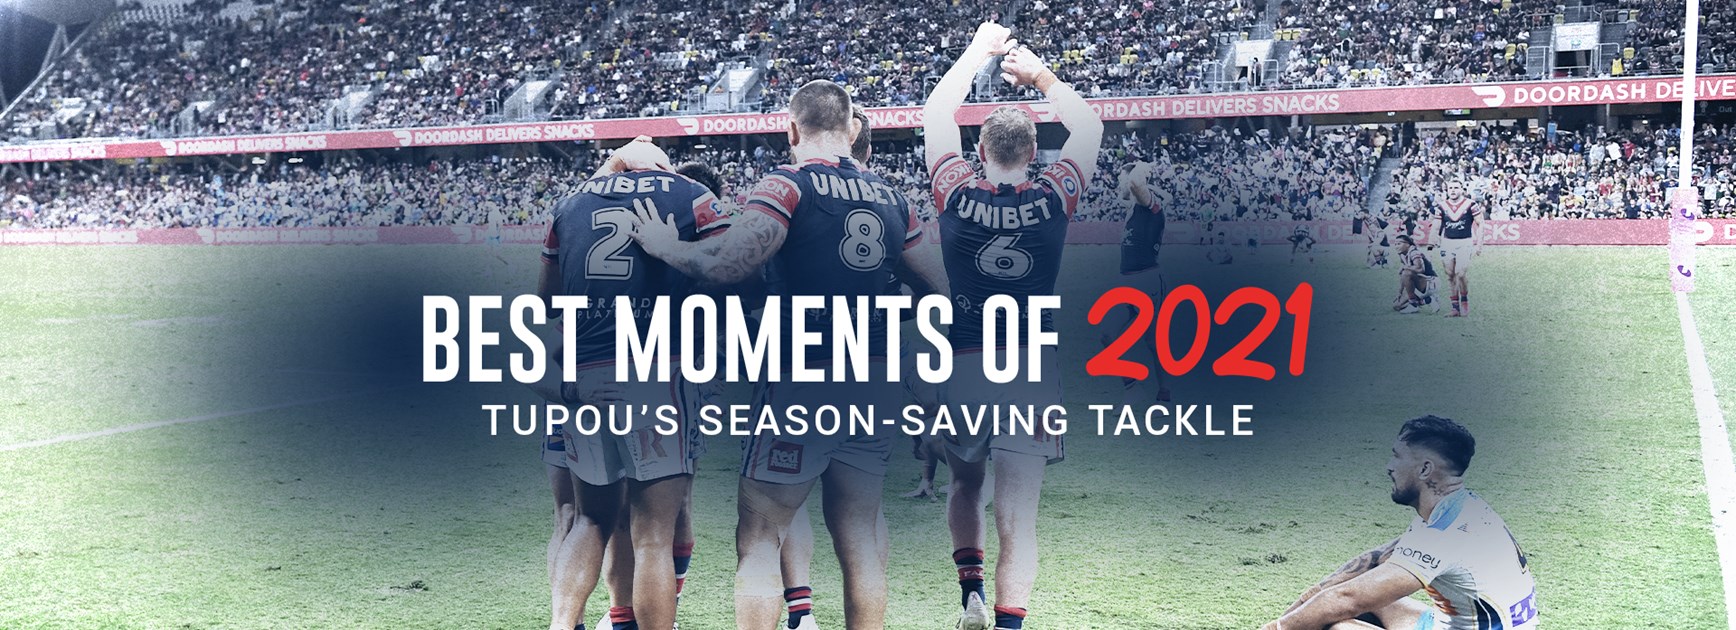 Best Moments of 2021: Tupou's Season-Saving Tackle